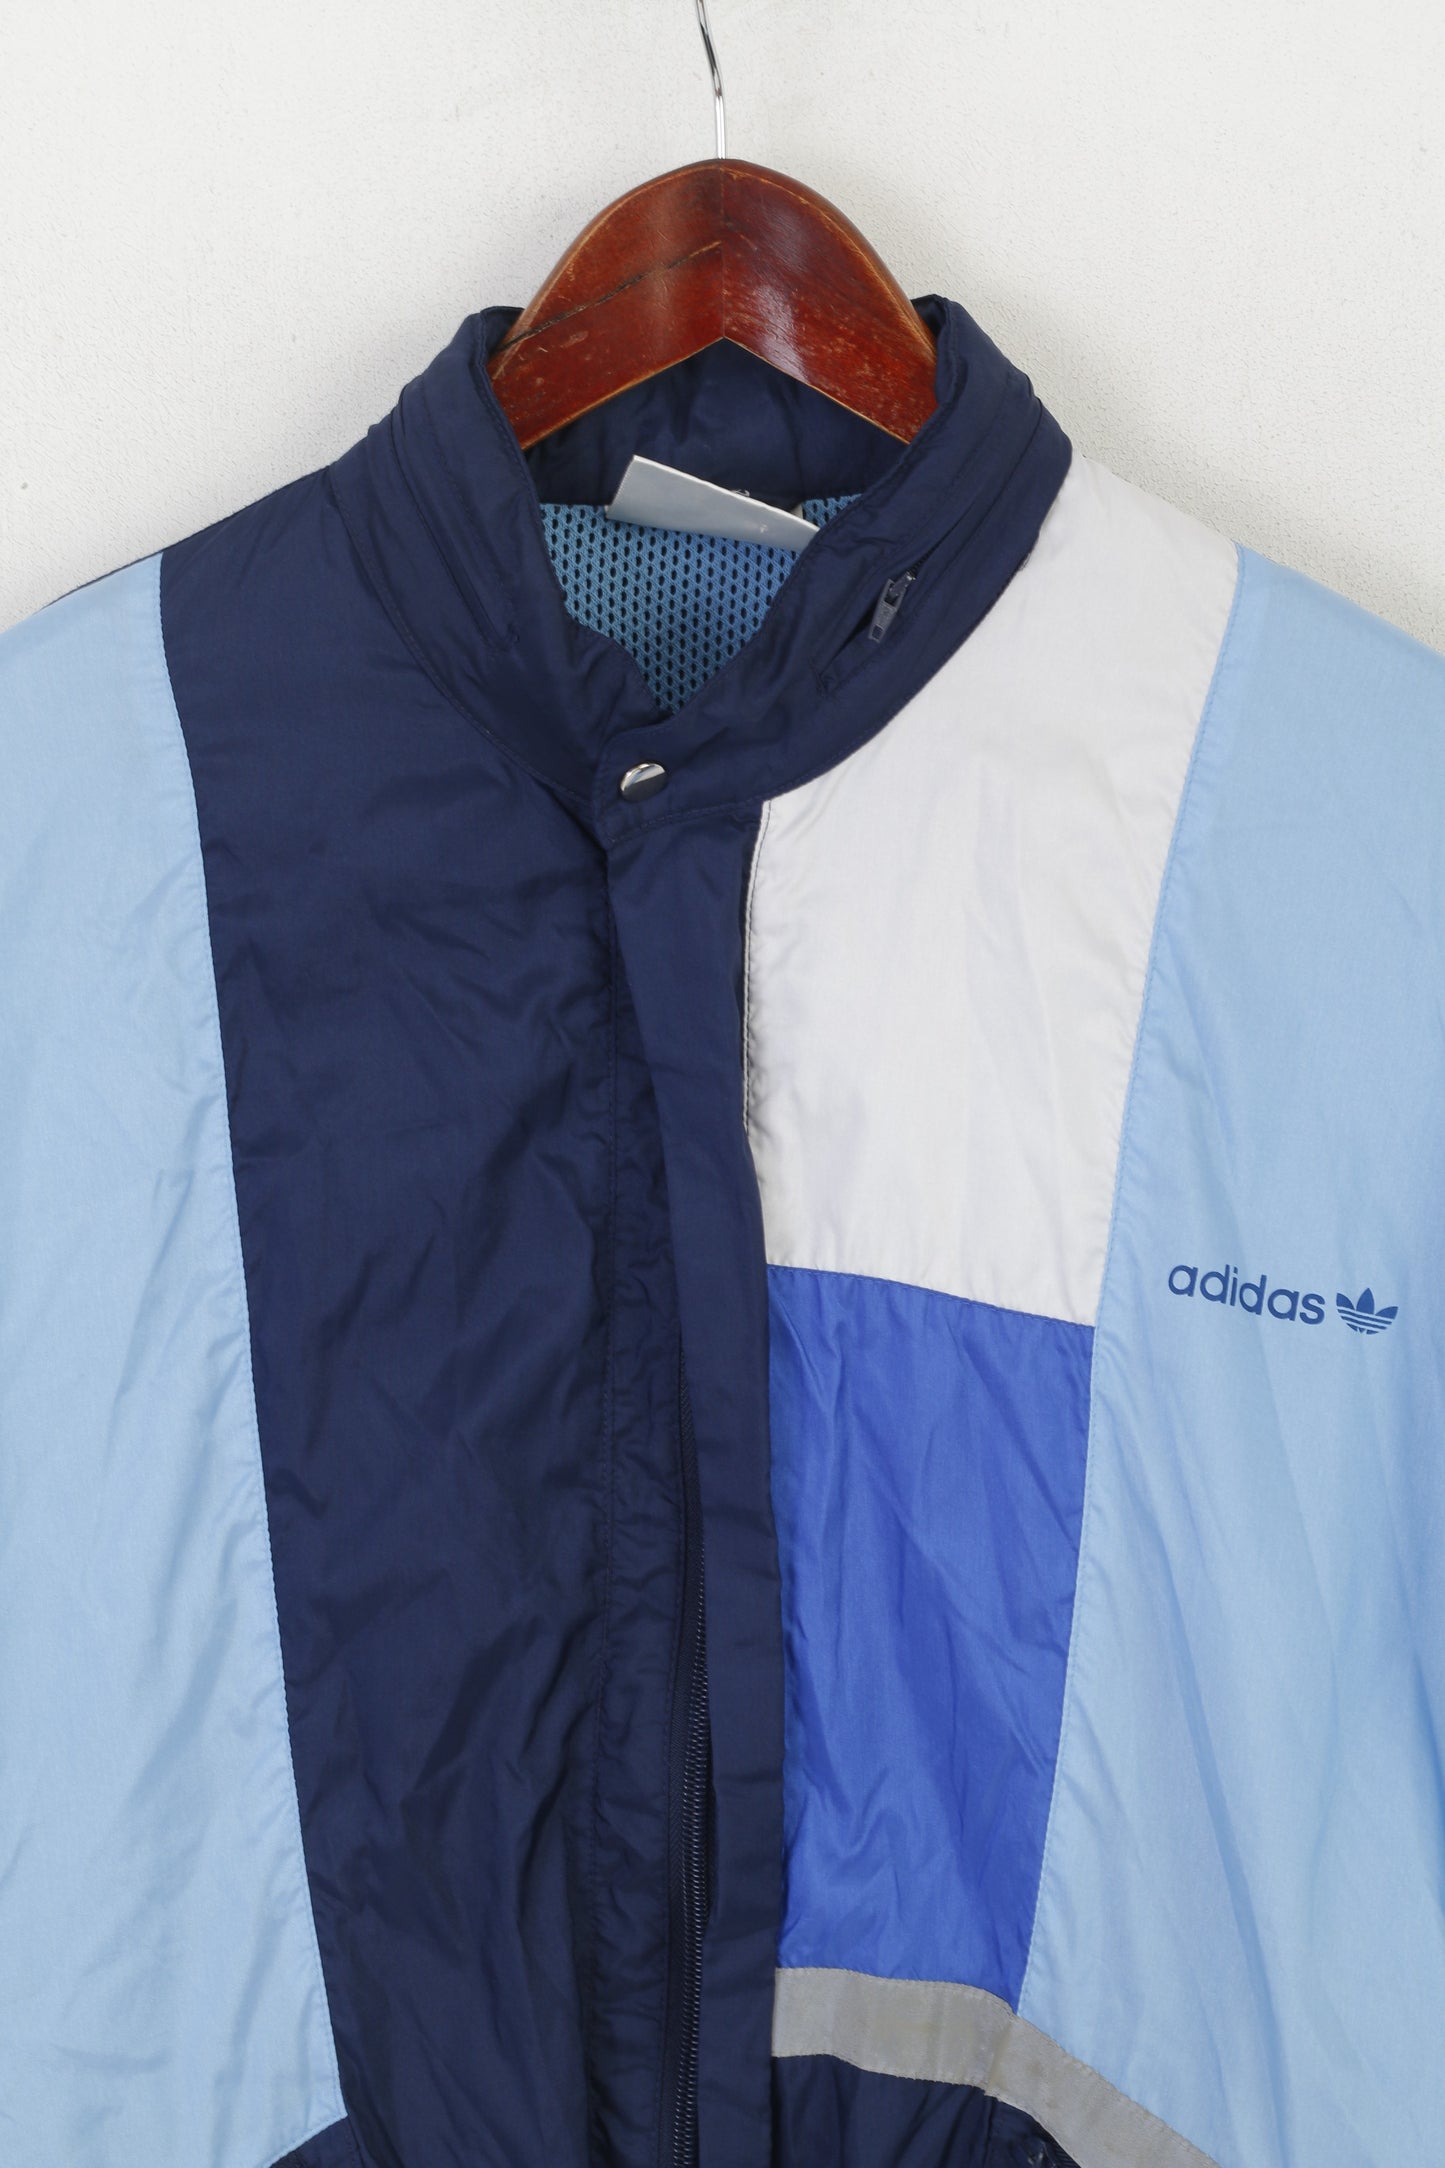 Adidas Men 174 M Jacket Blue Nylon Reflective Sportswear Zip Up Vintage Top